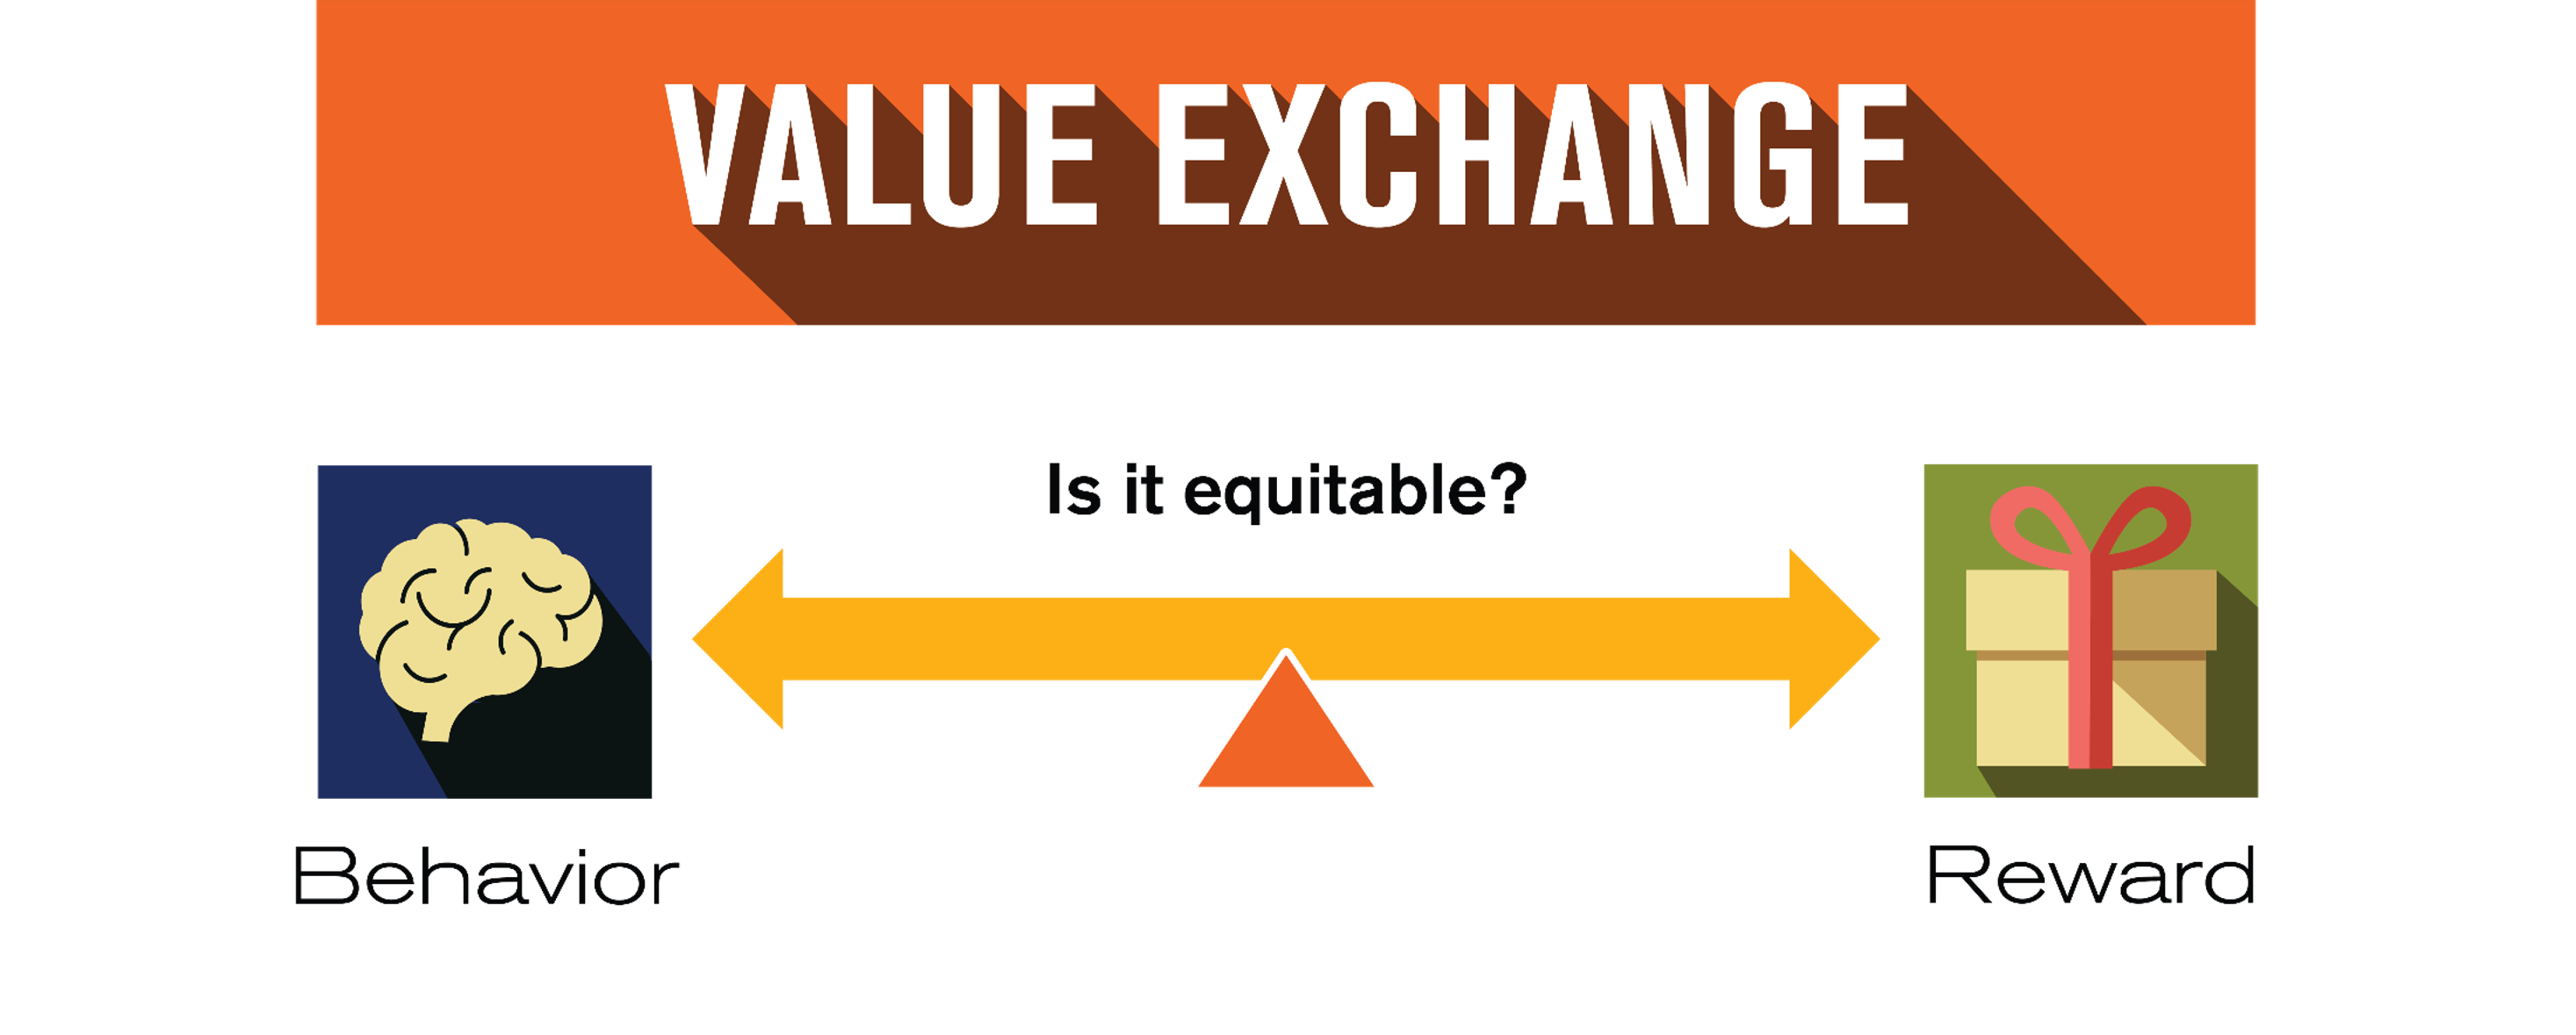 Value exchange.png